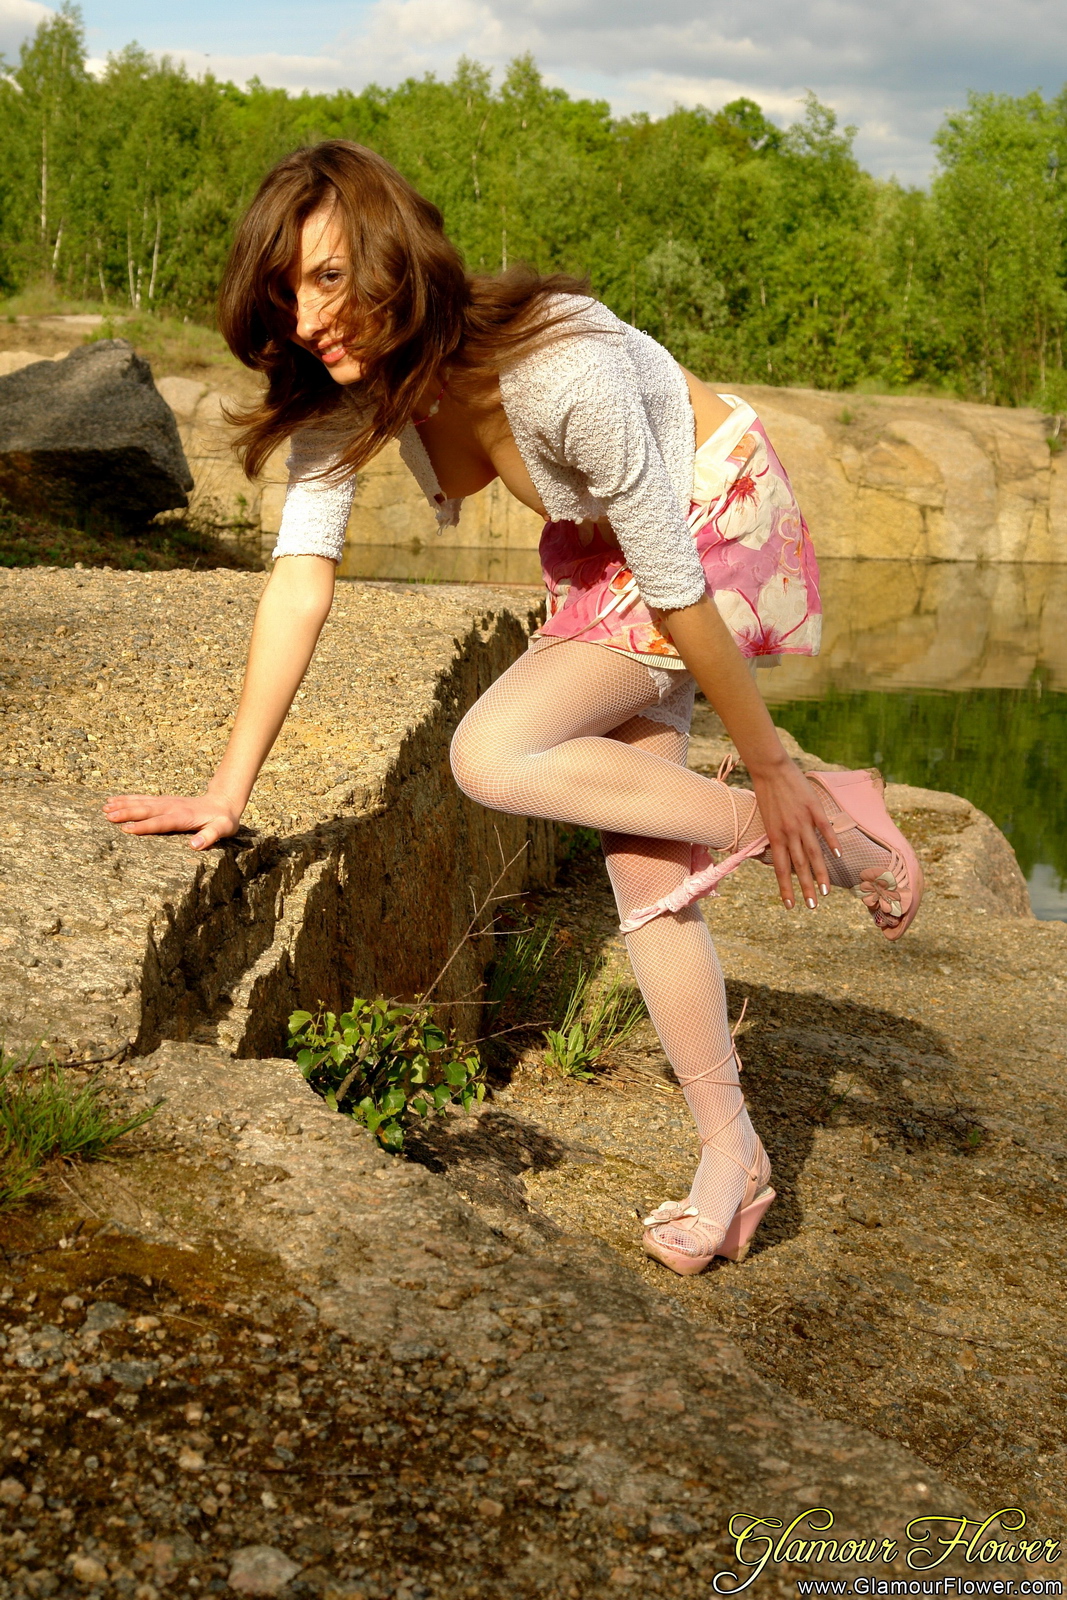 jini-naked-fishnet-stockings-outdoor-quarries-glamourflower-16